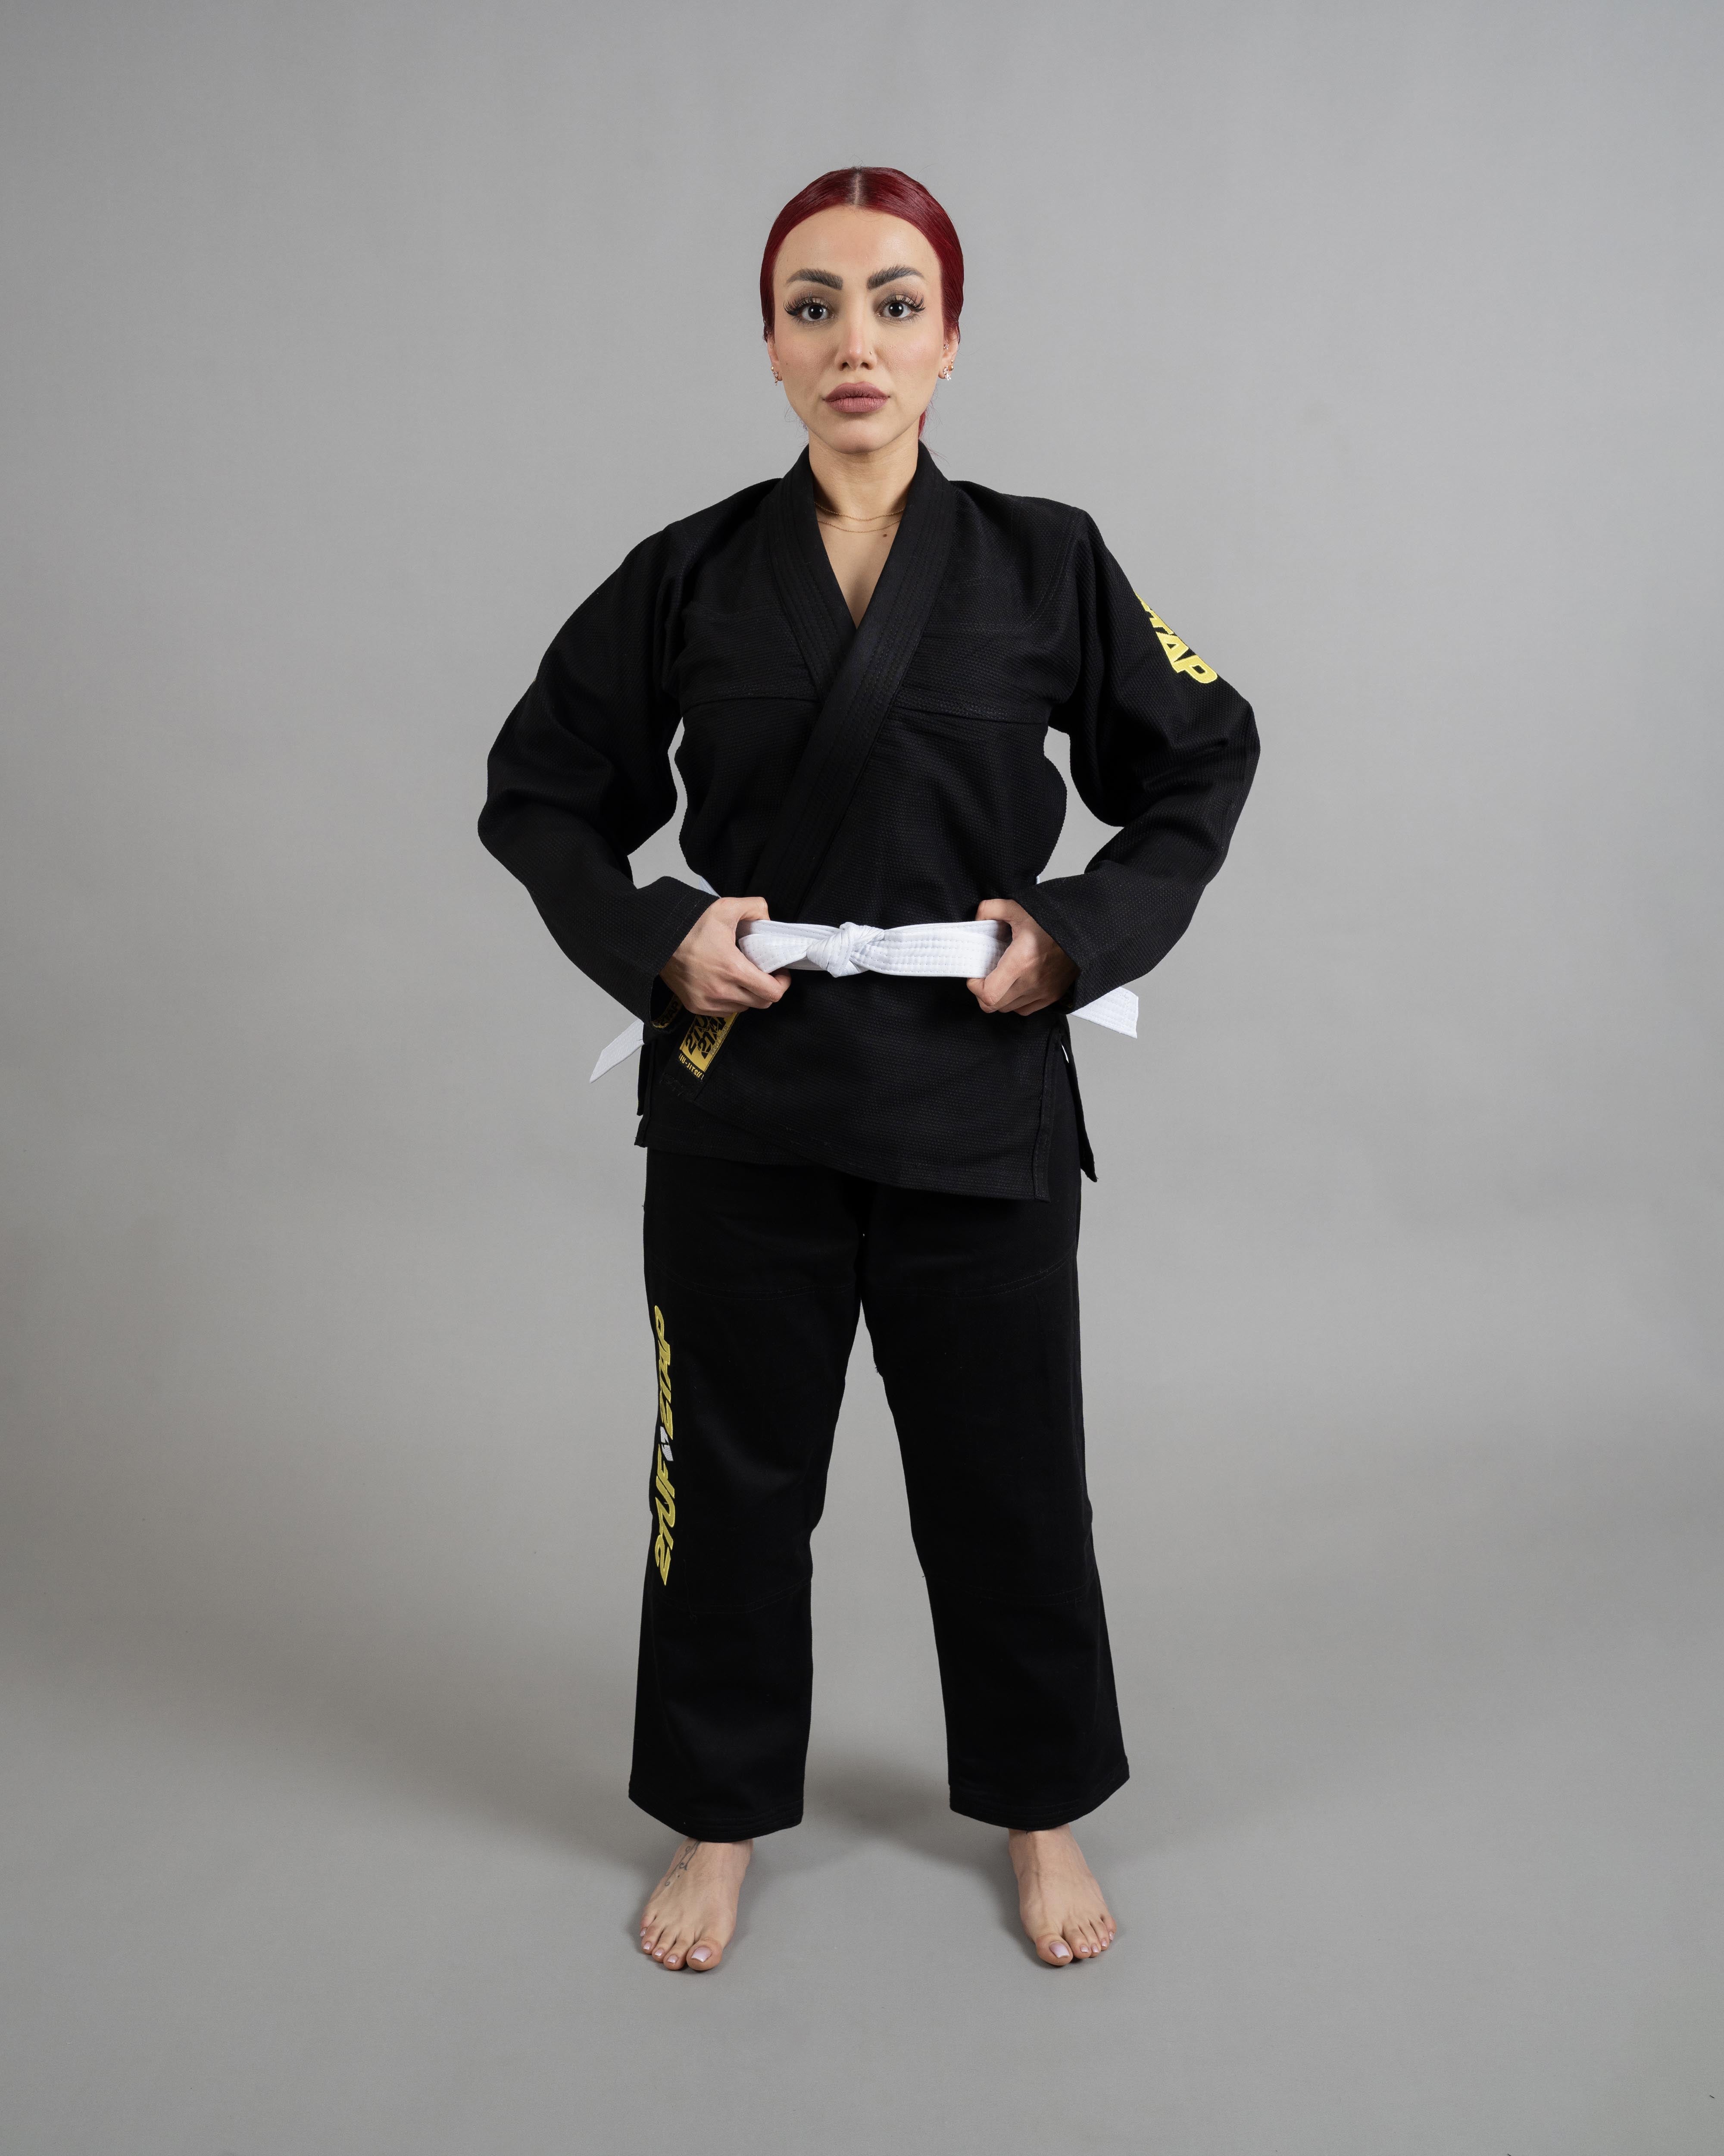 'Sweep' Jiu-Jitsu Gi Uniform - Black/Yellow